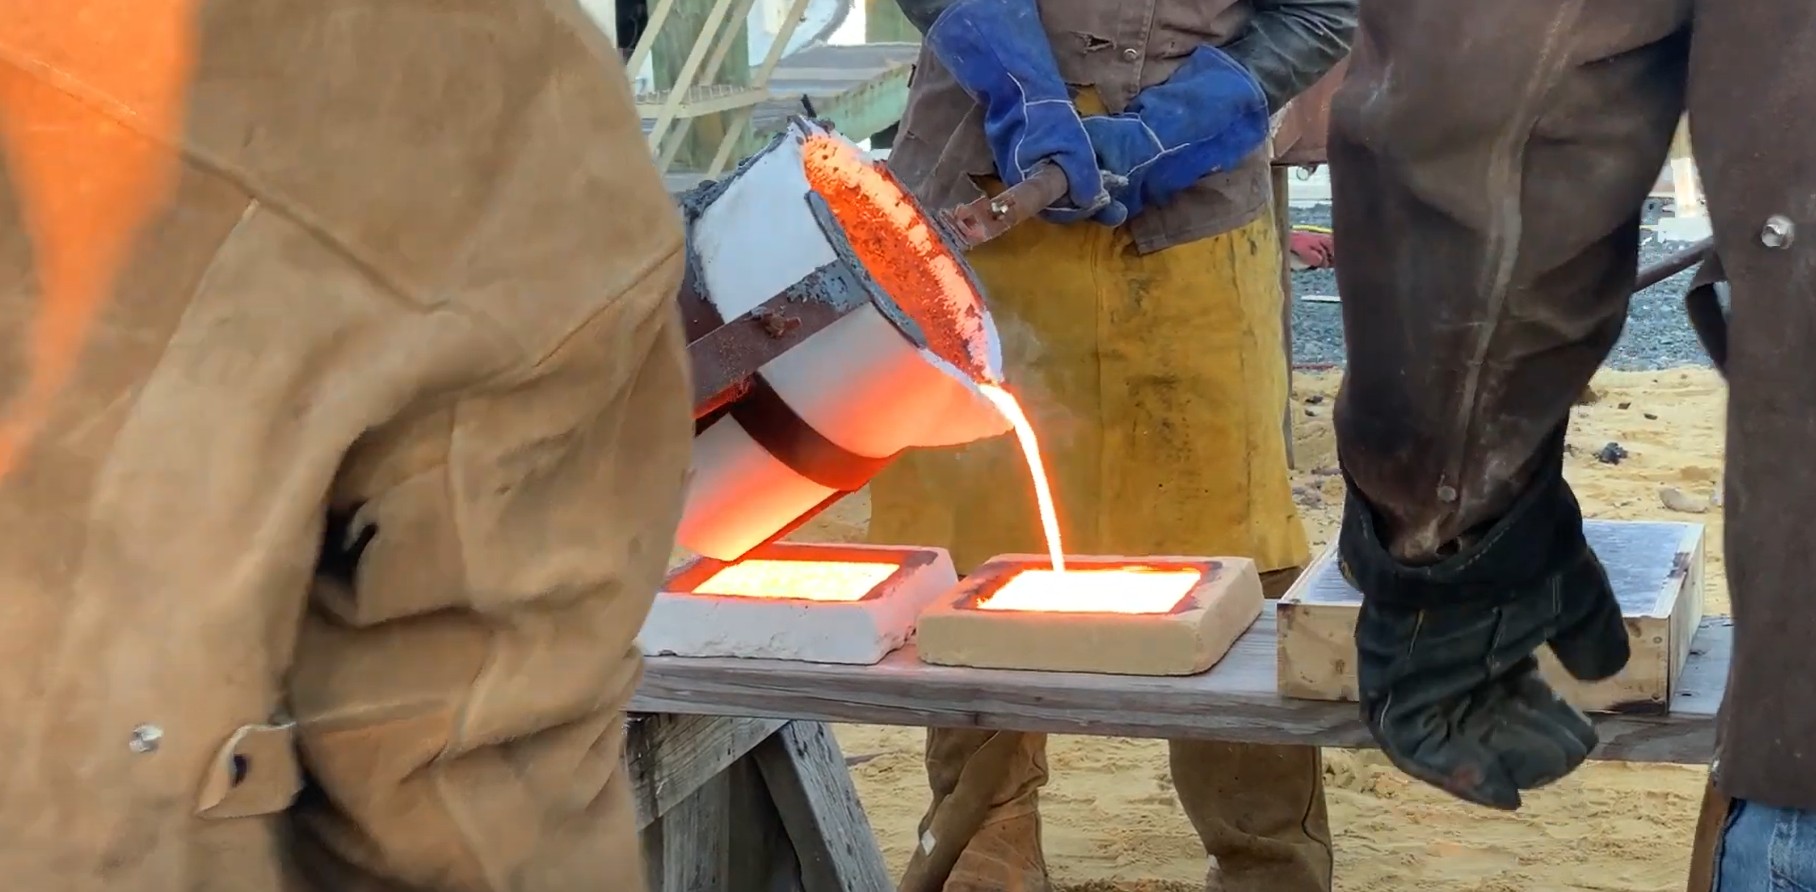 VIDEO: DIY Iron Casting at Maritime Museum